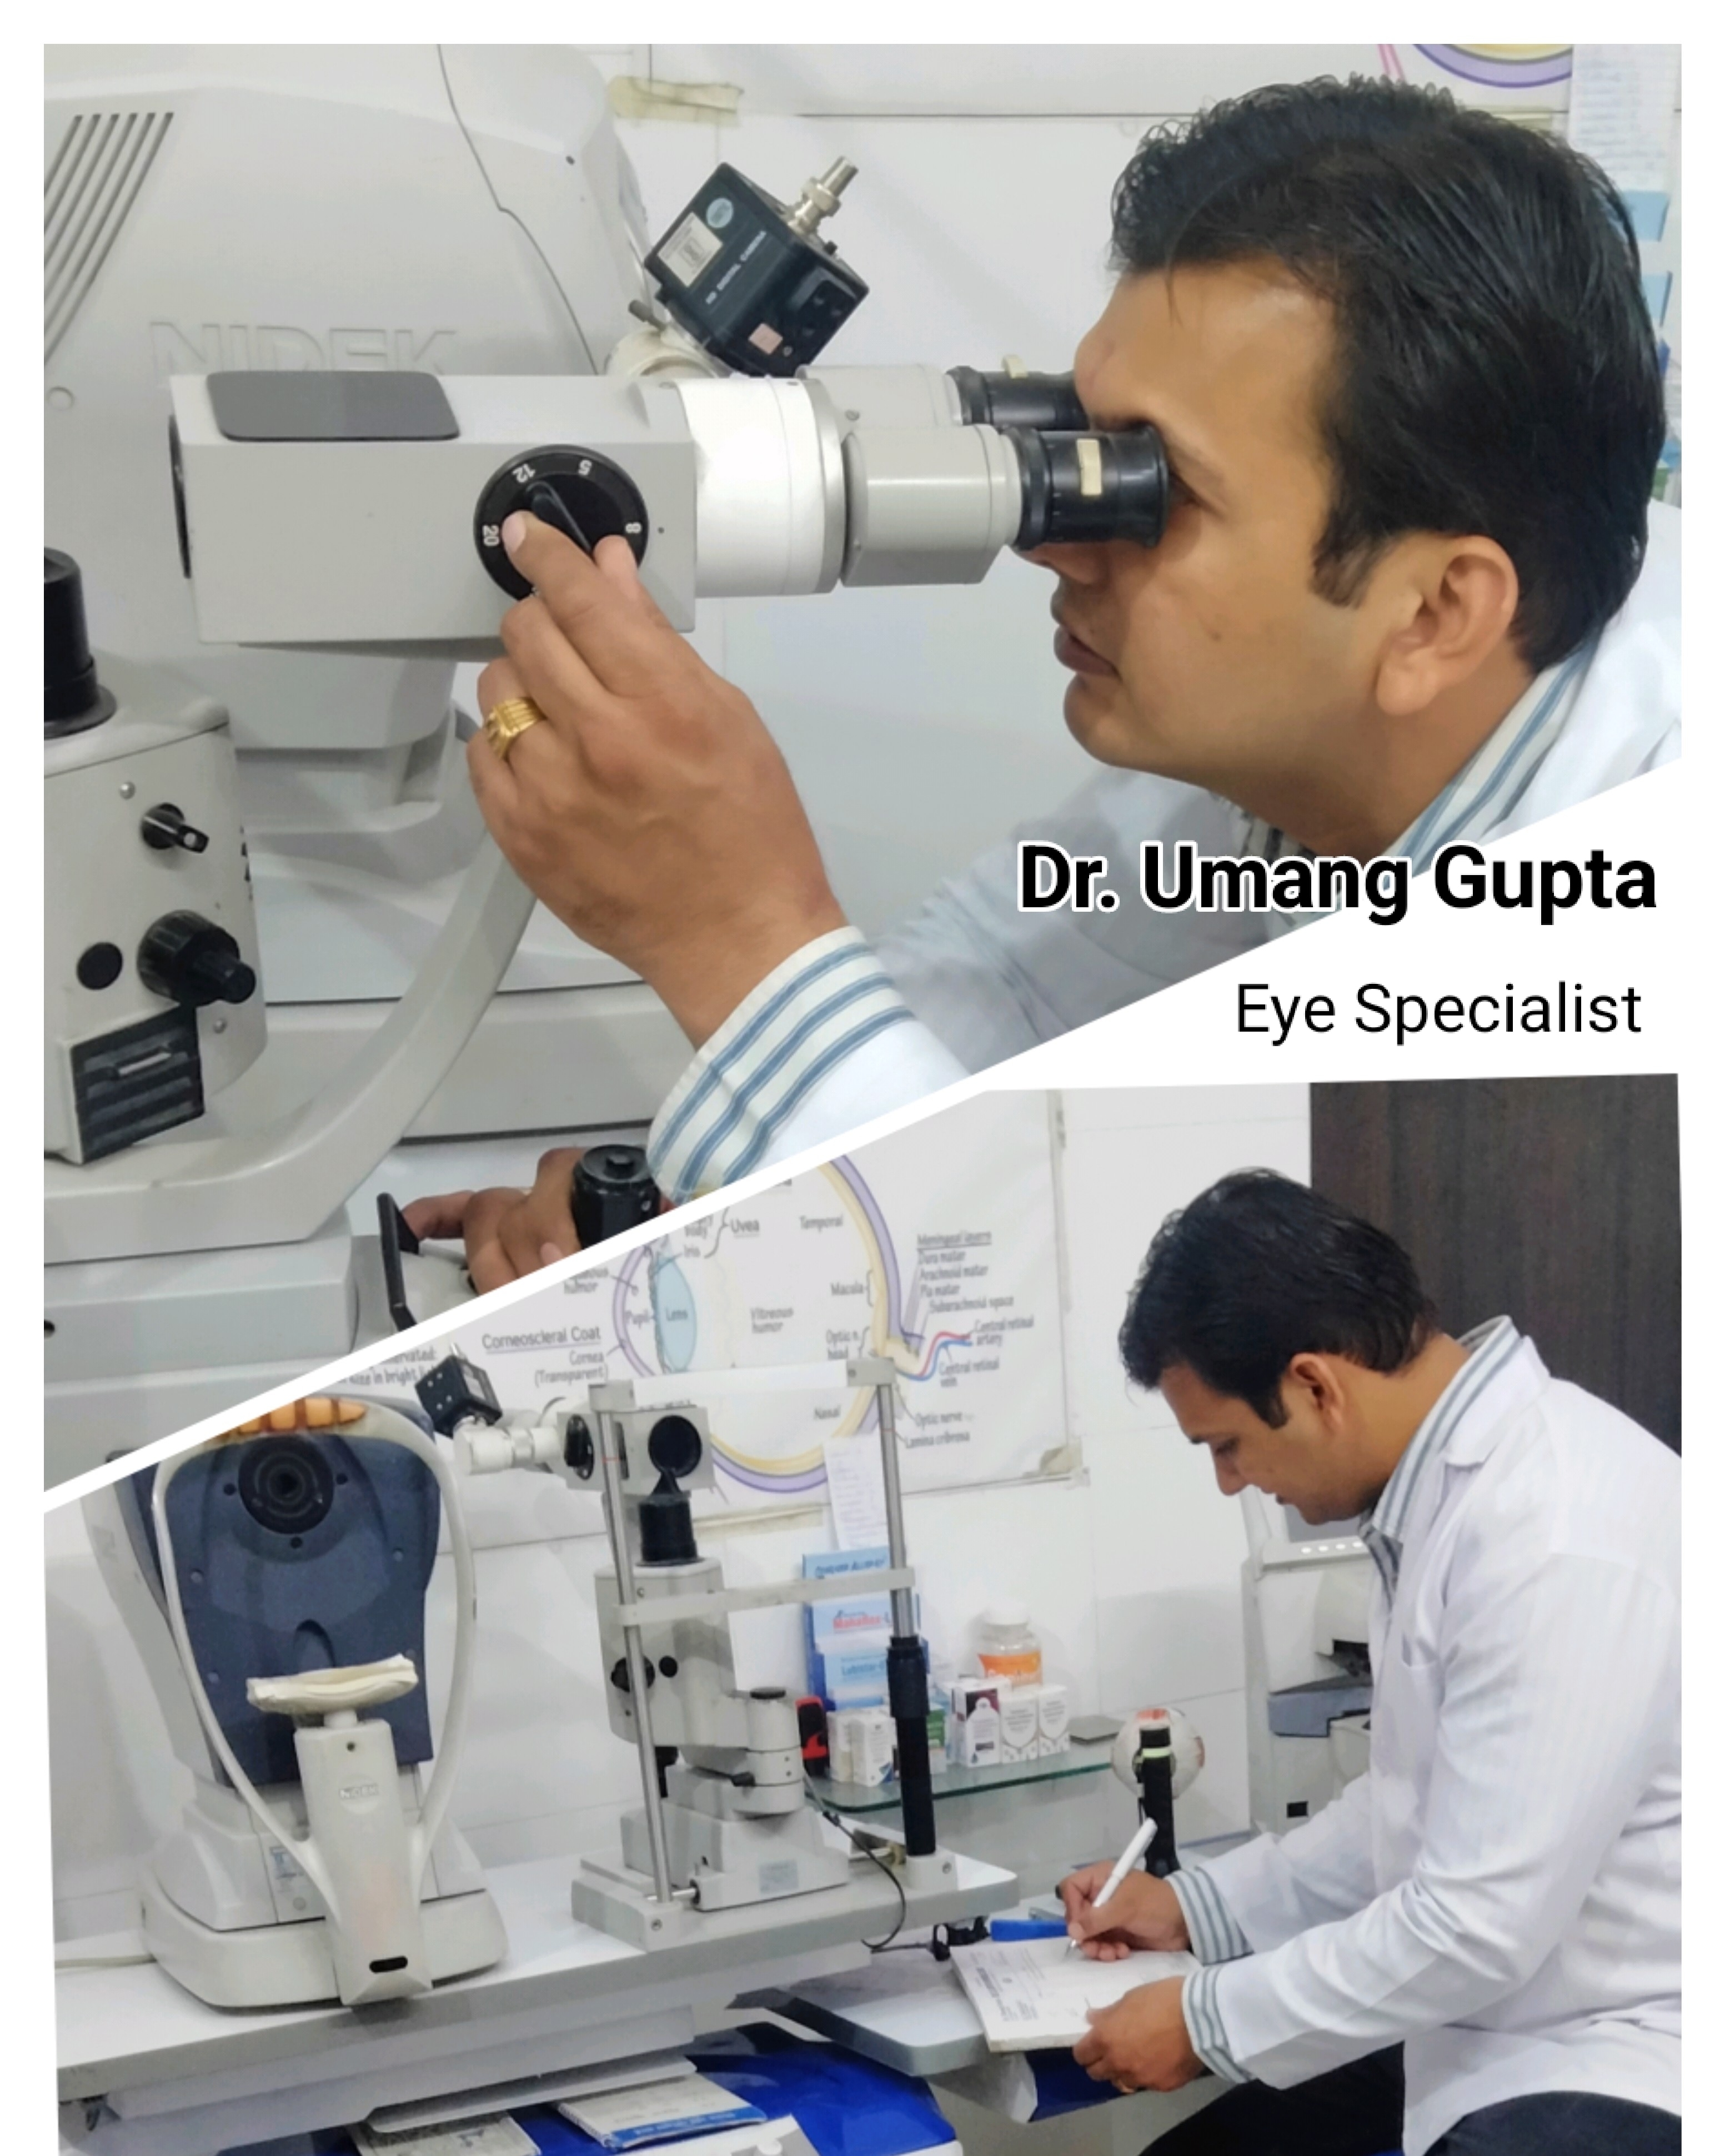 Dr. Umang Gupta